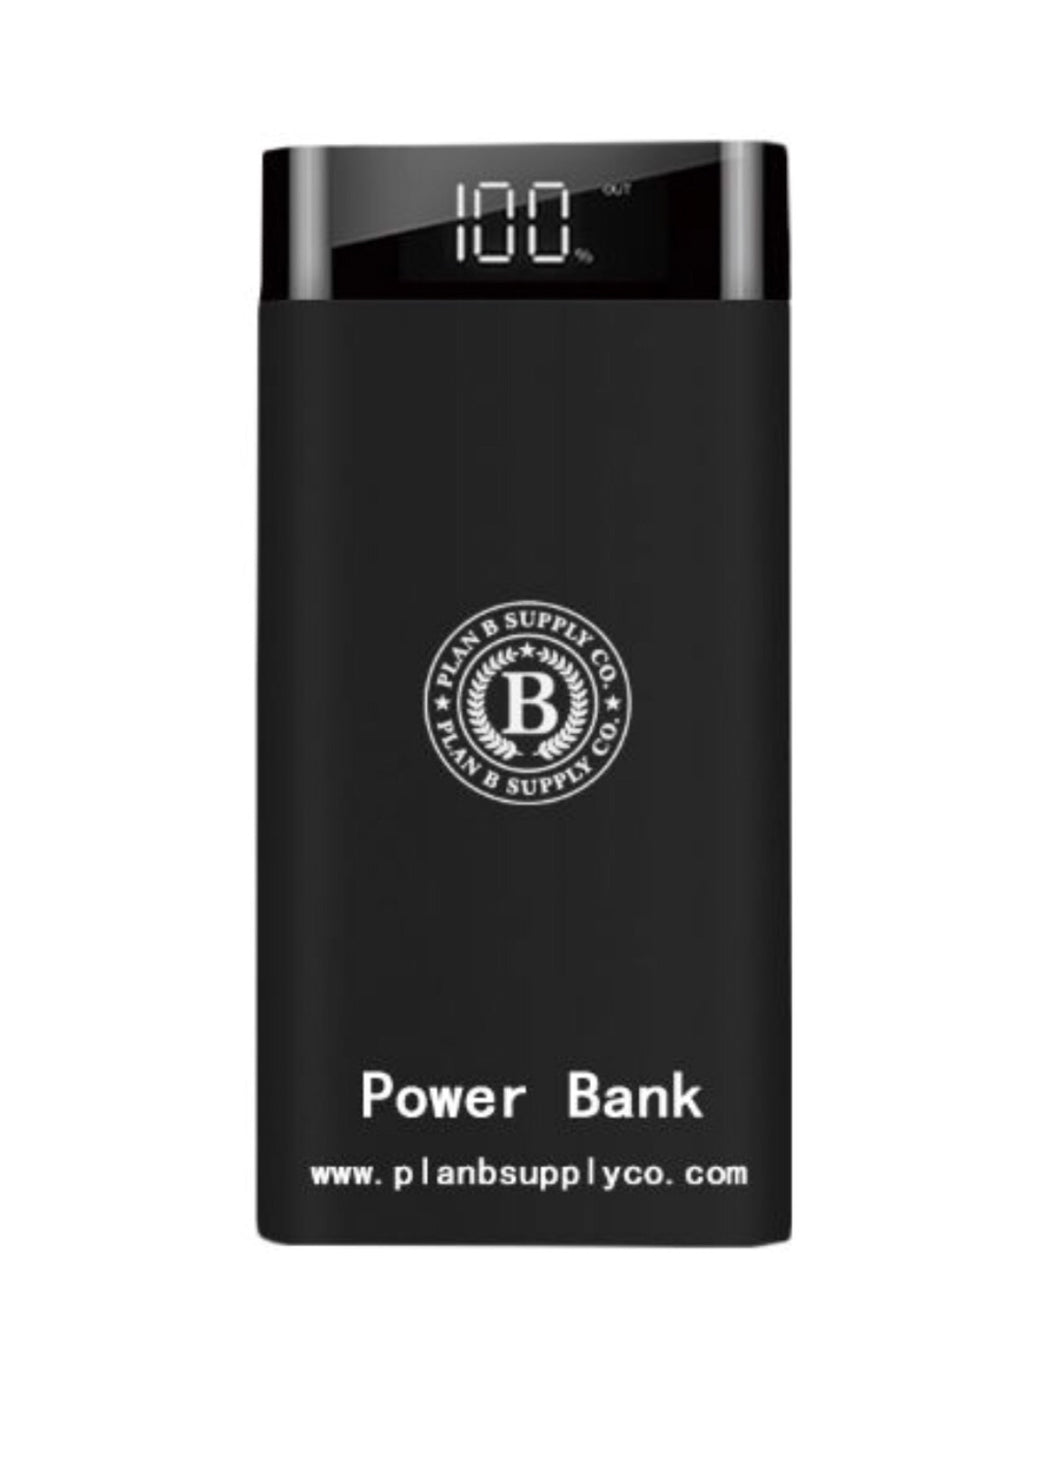 Plan b supply Co power bank 6000 mah